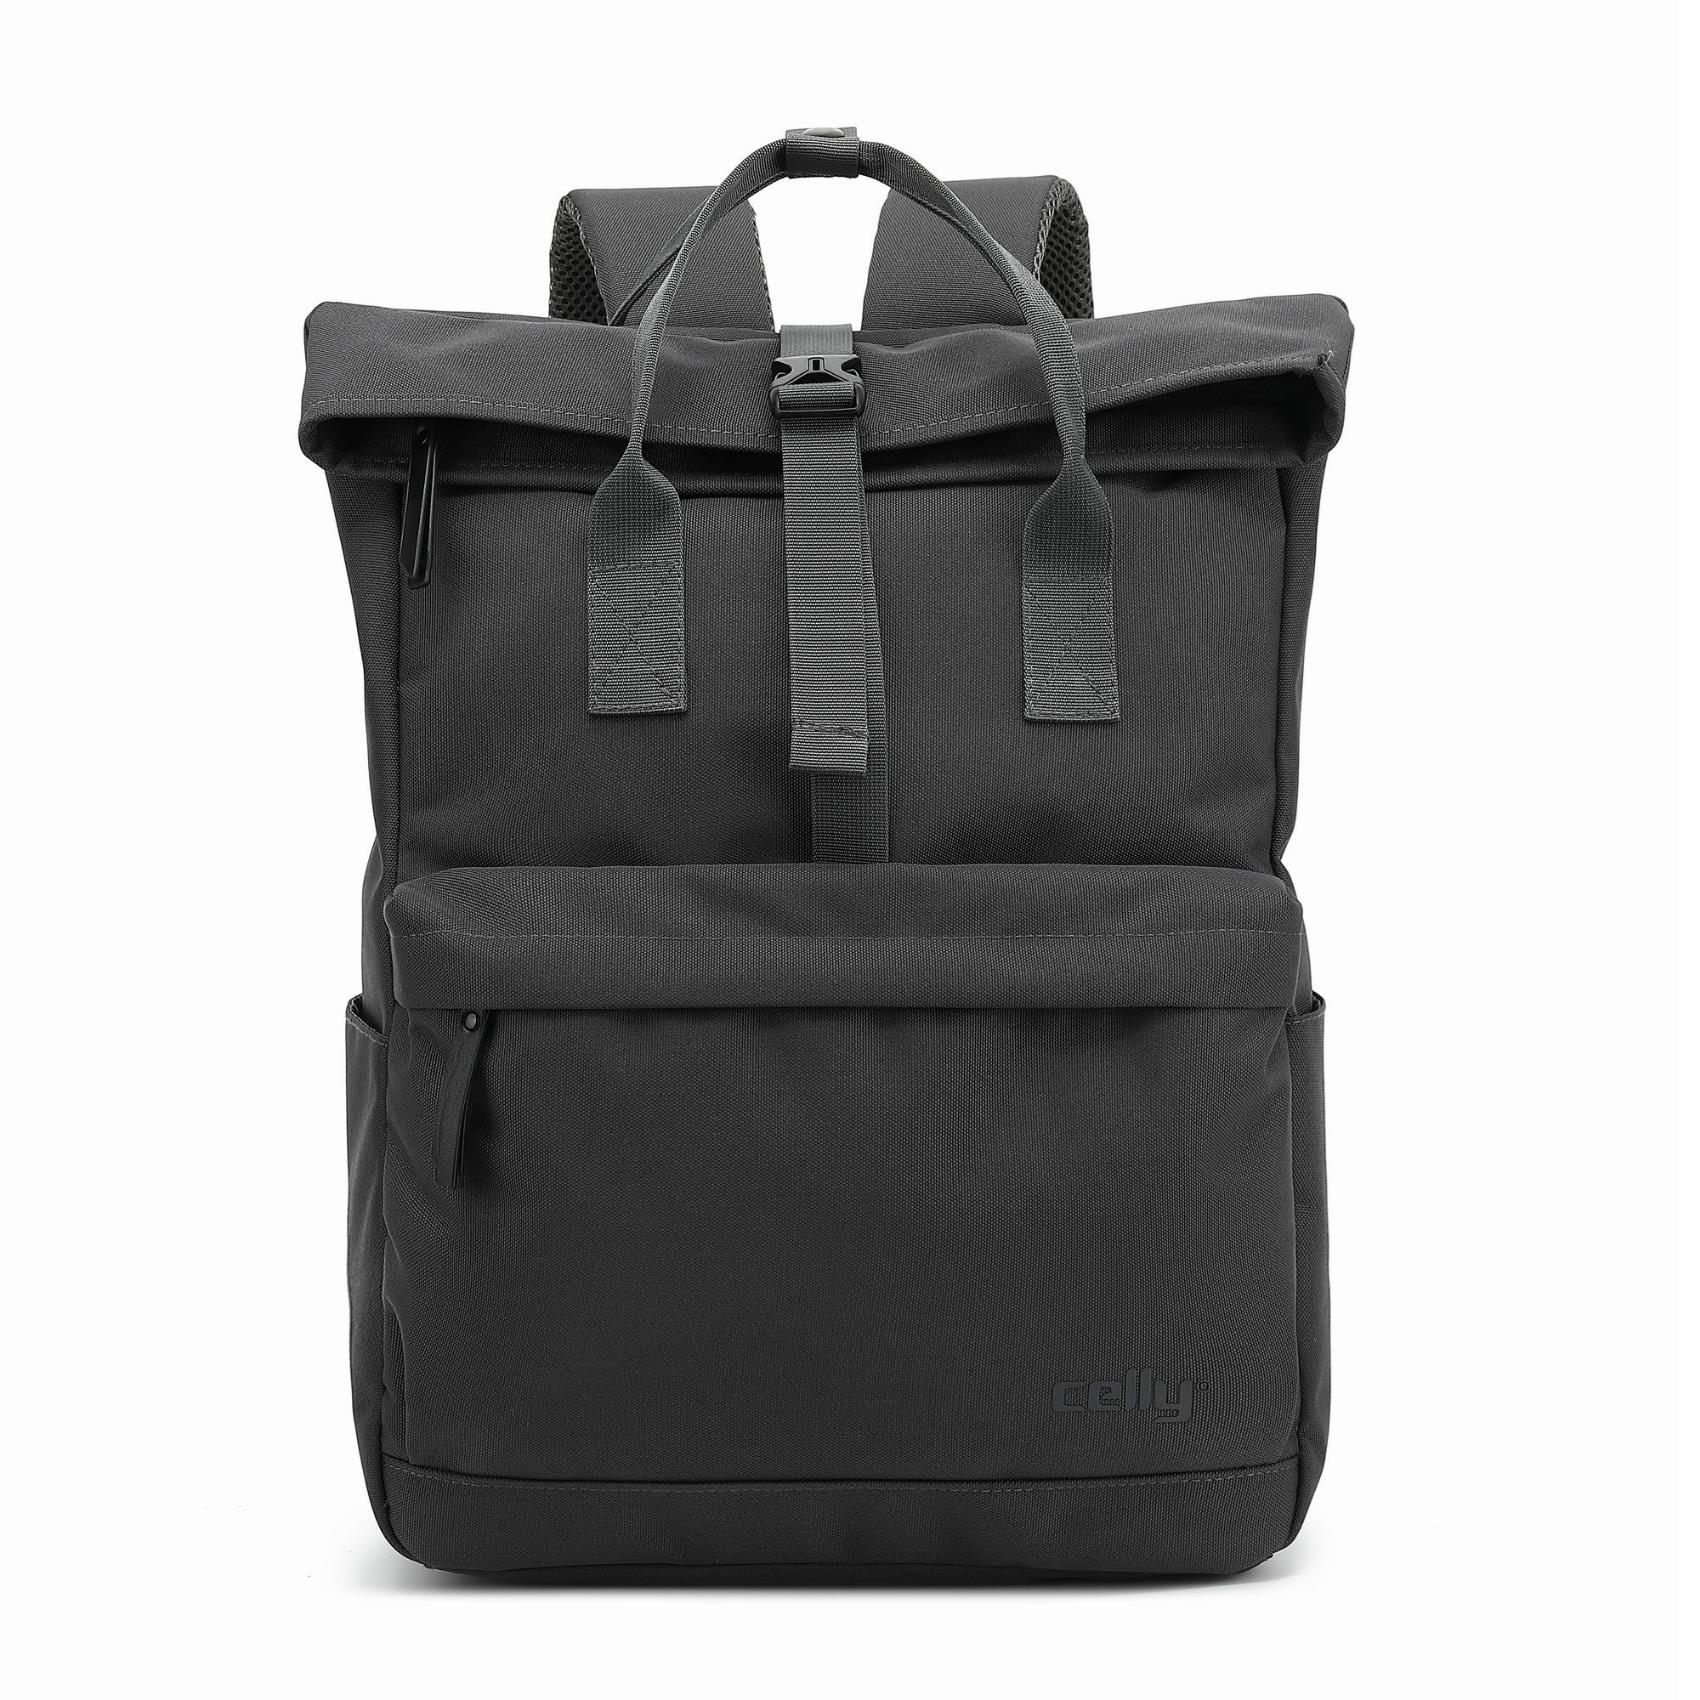 Backpack For Trips Blue Celly Venturepackbl 8021735198208